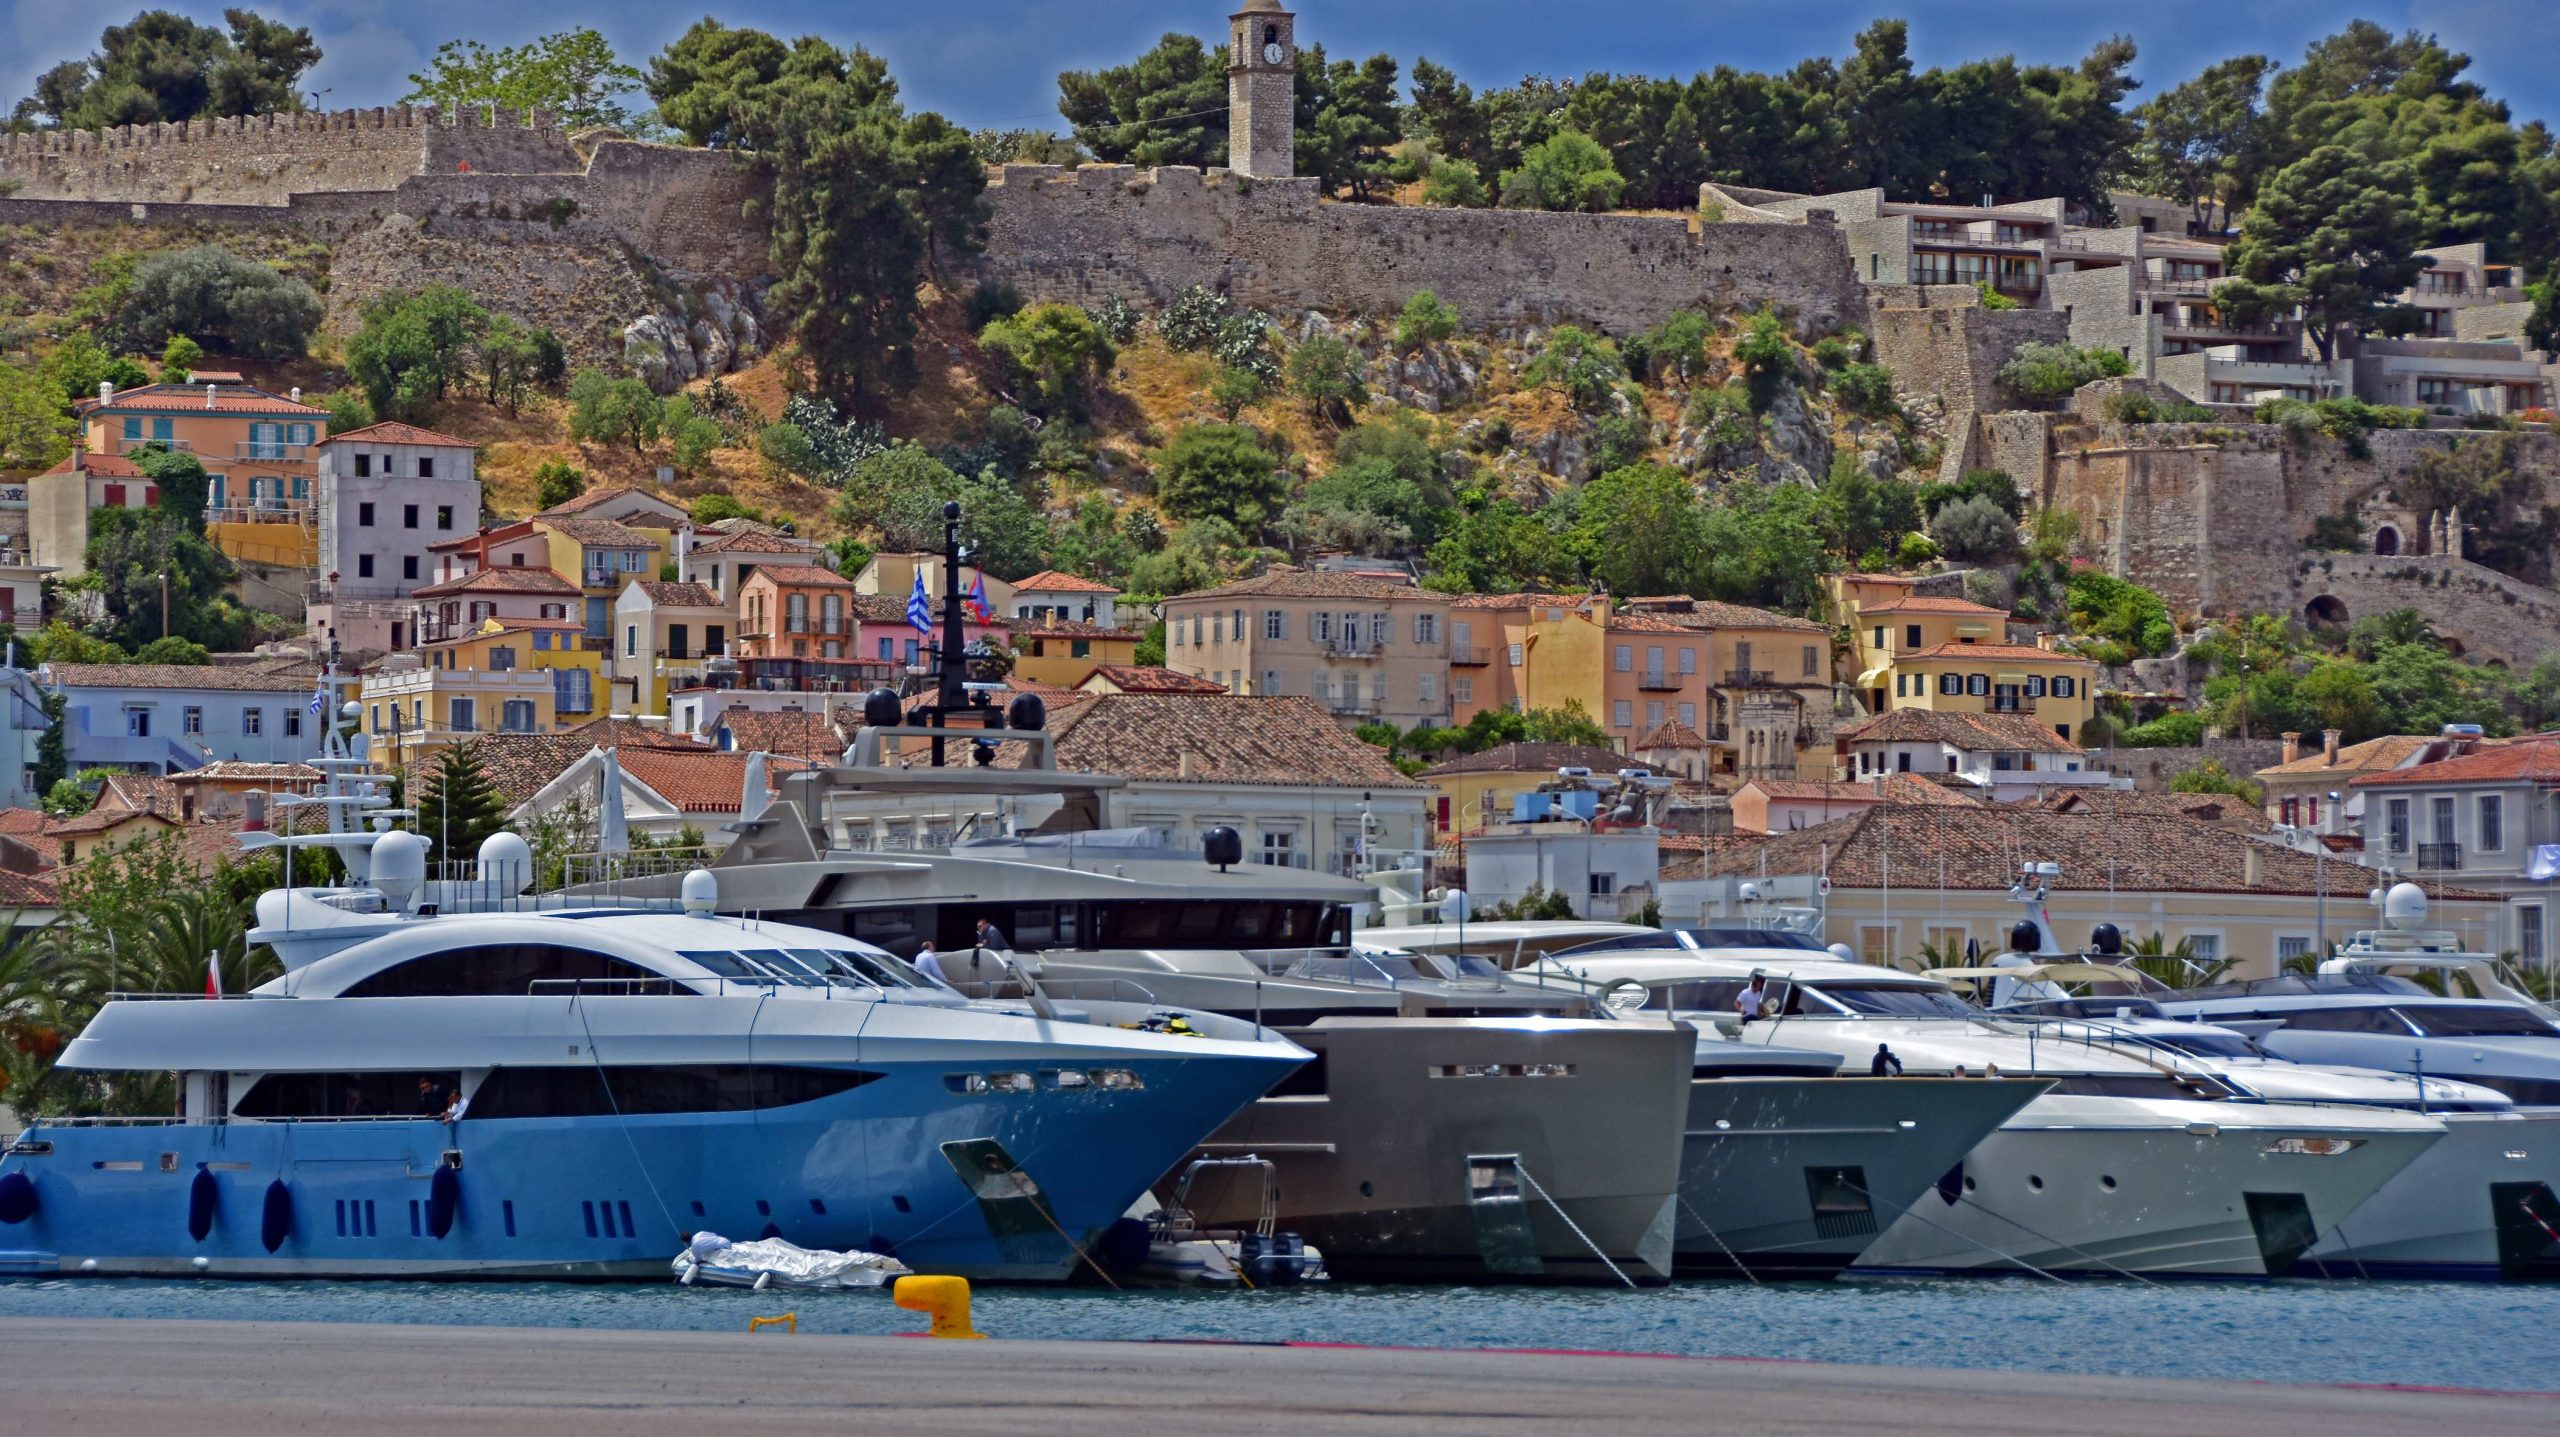 Online e-CharterPermission Platform for Yacht Leasing in Greece Debuts